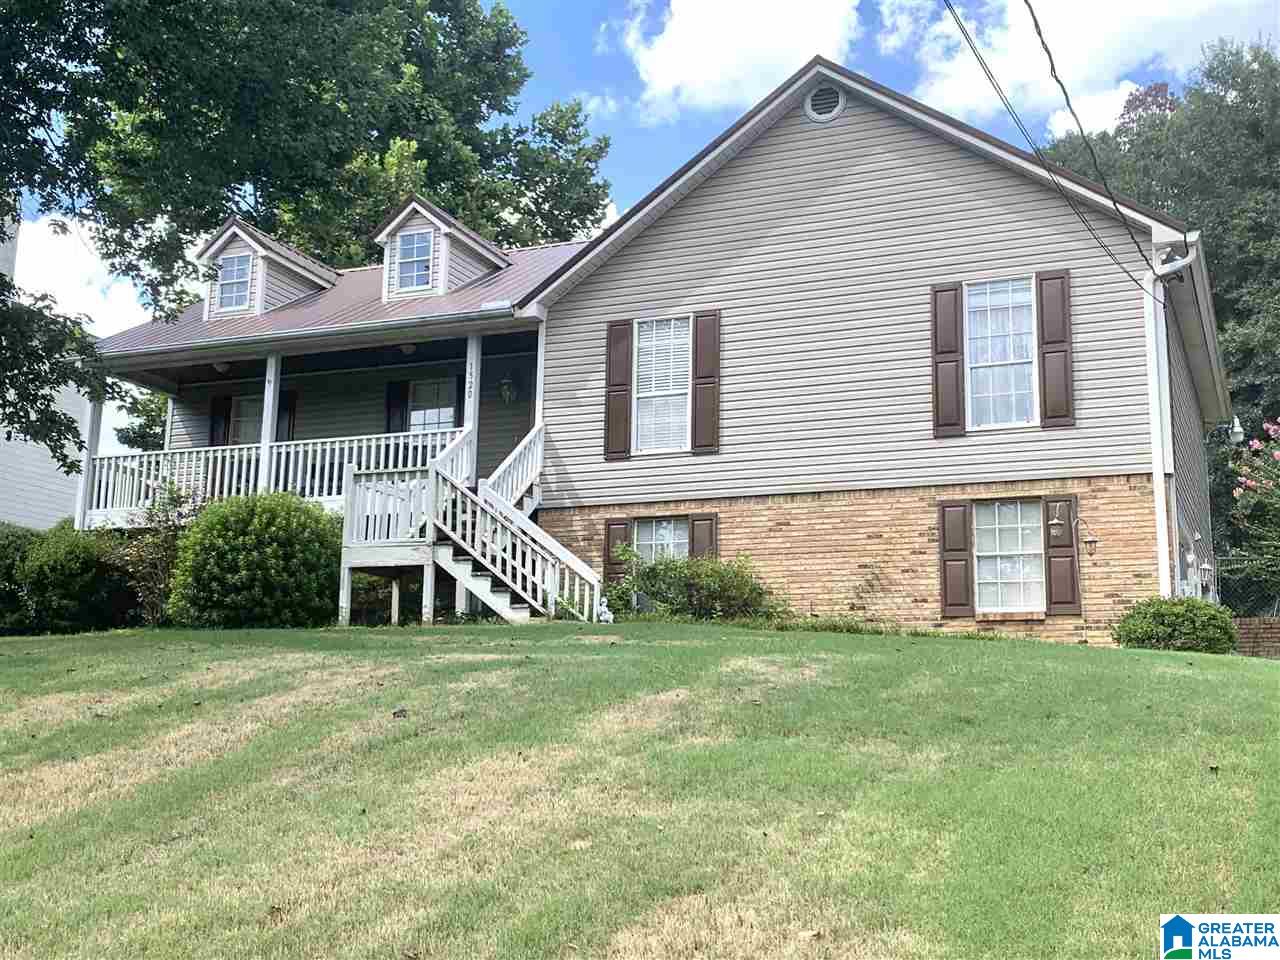 49 new home listings around Alabama, Aug. 20-22